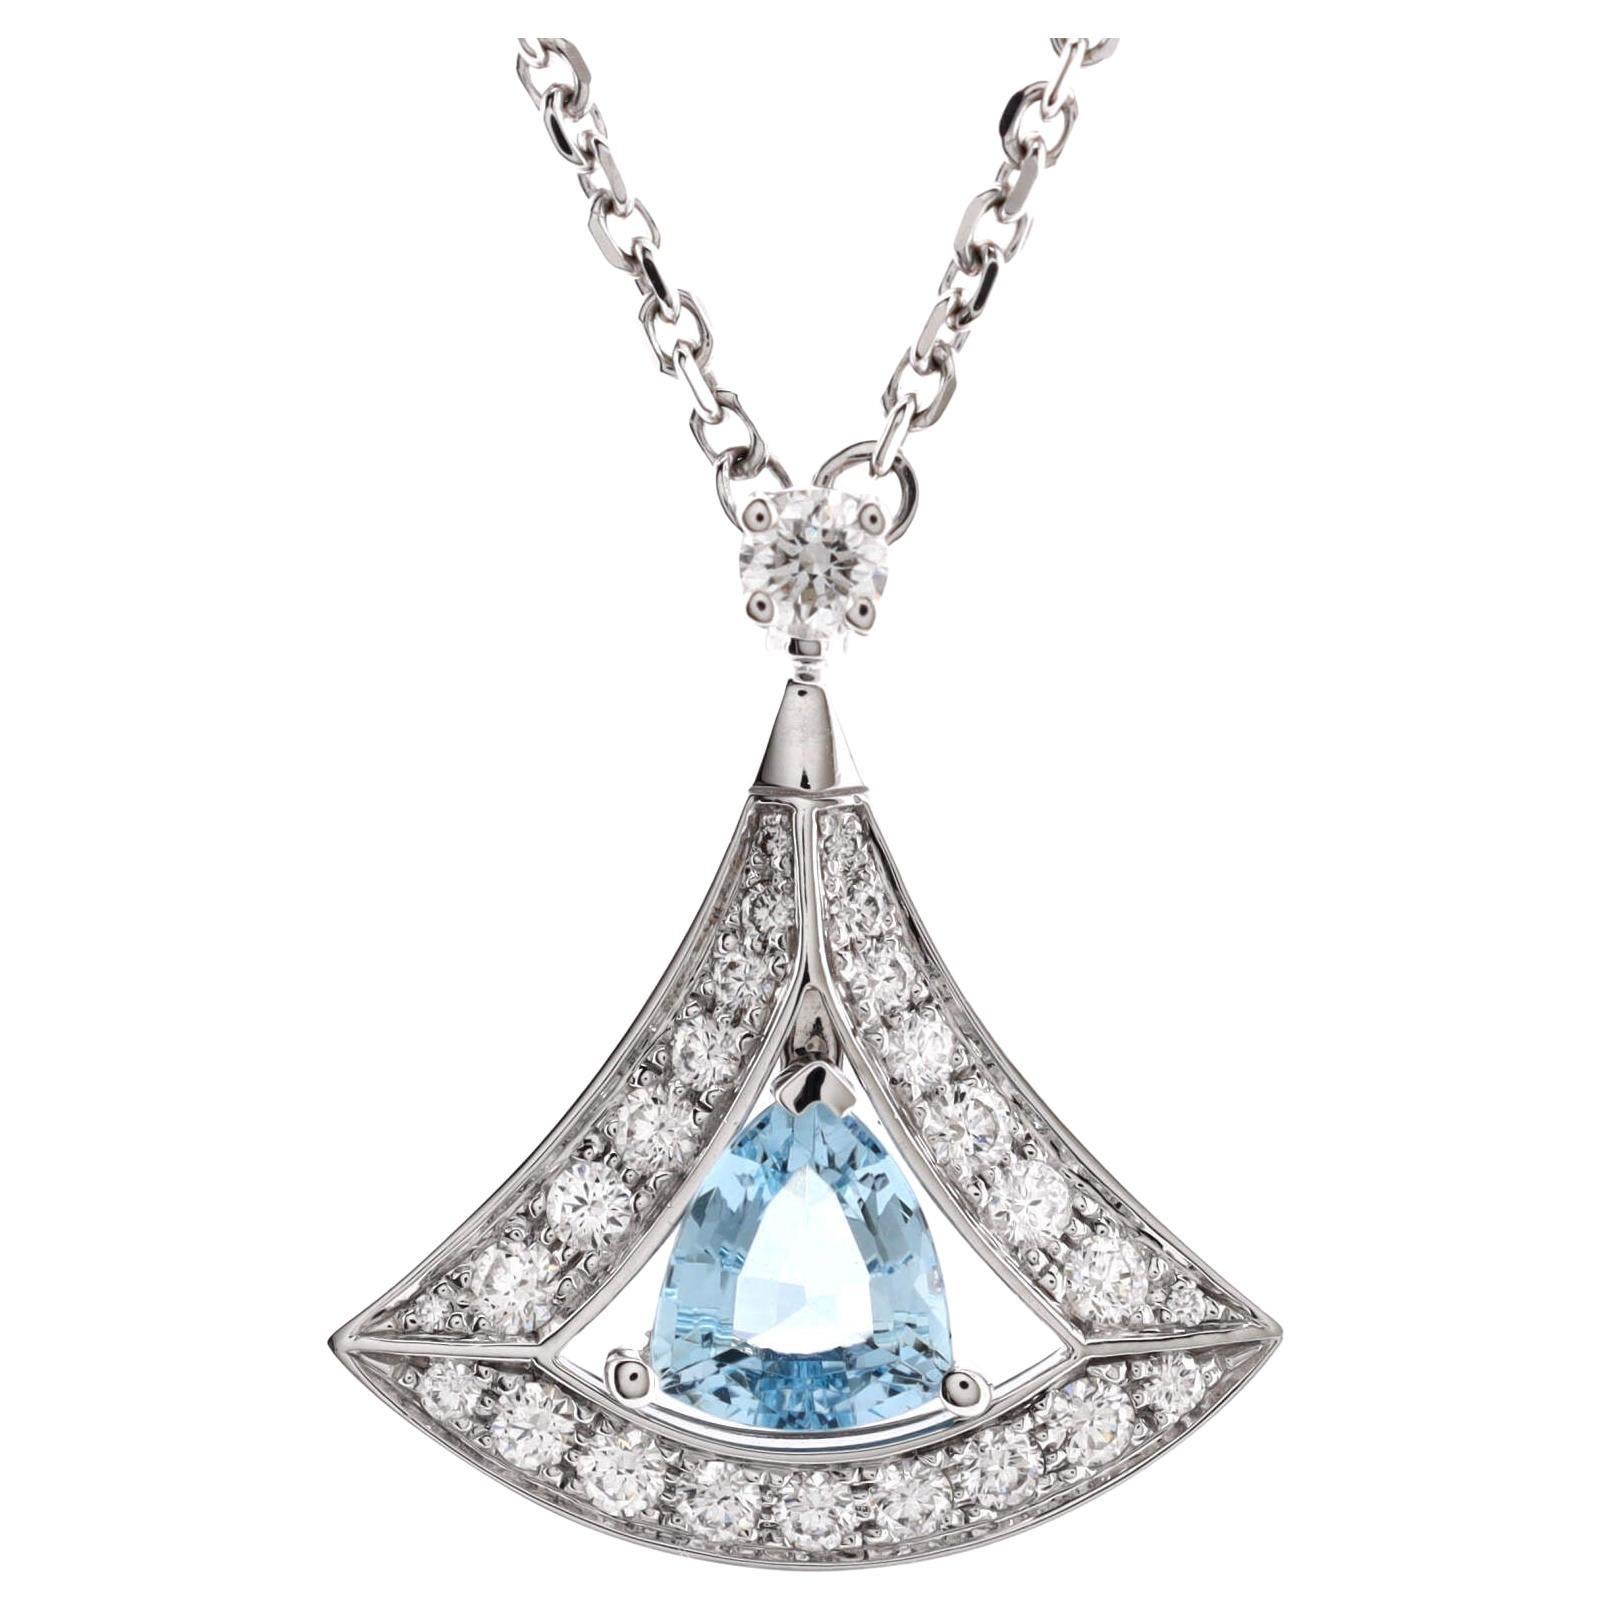 Bvlgari Diva's Dream Pendant Necklace 18k White Gold with Aquamarine and Diamond